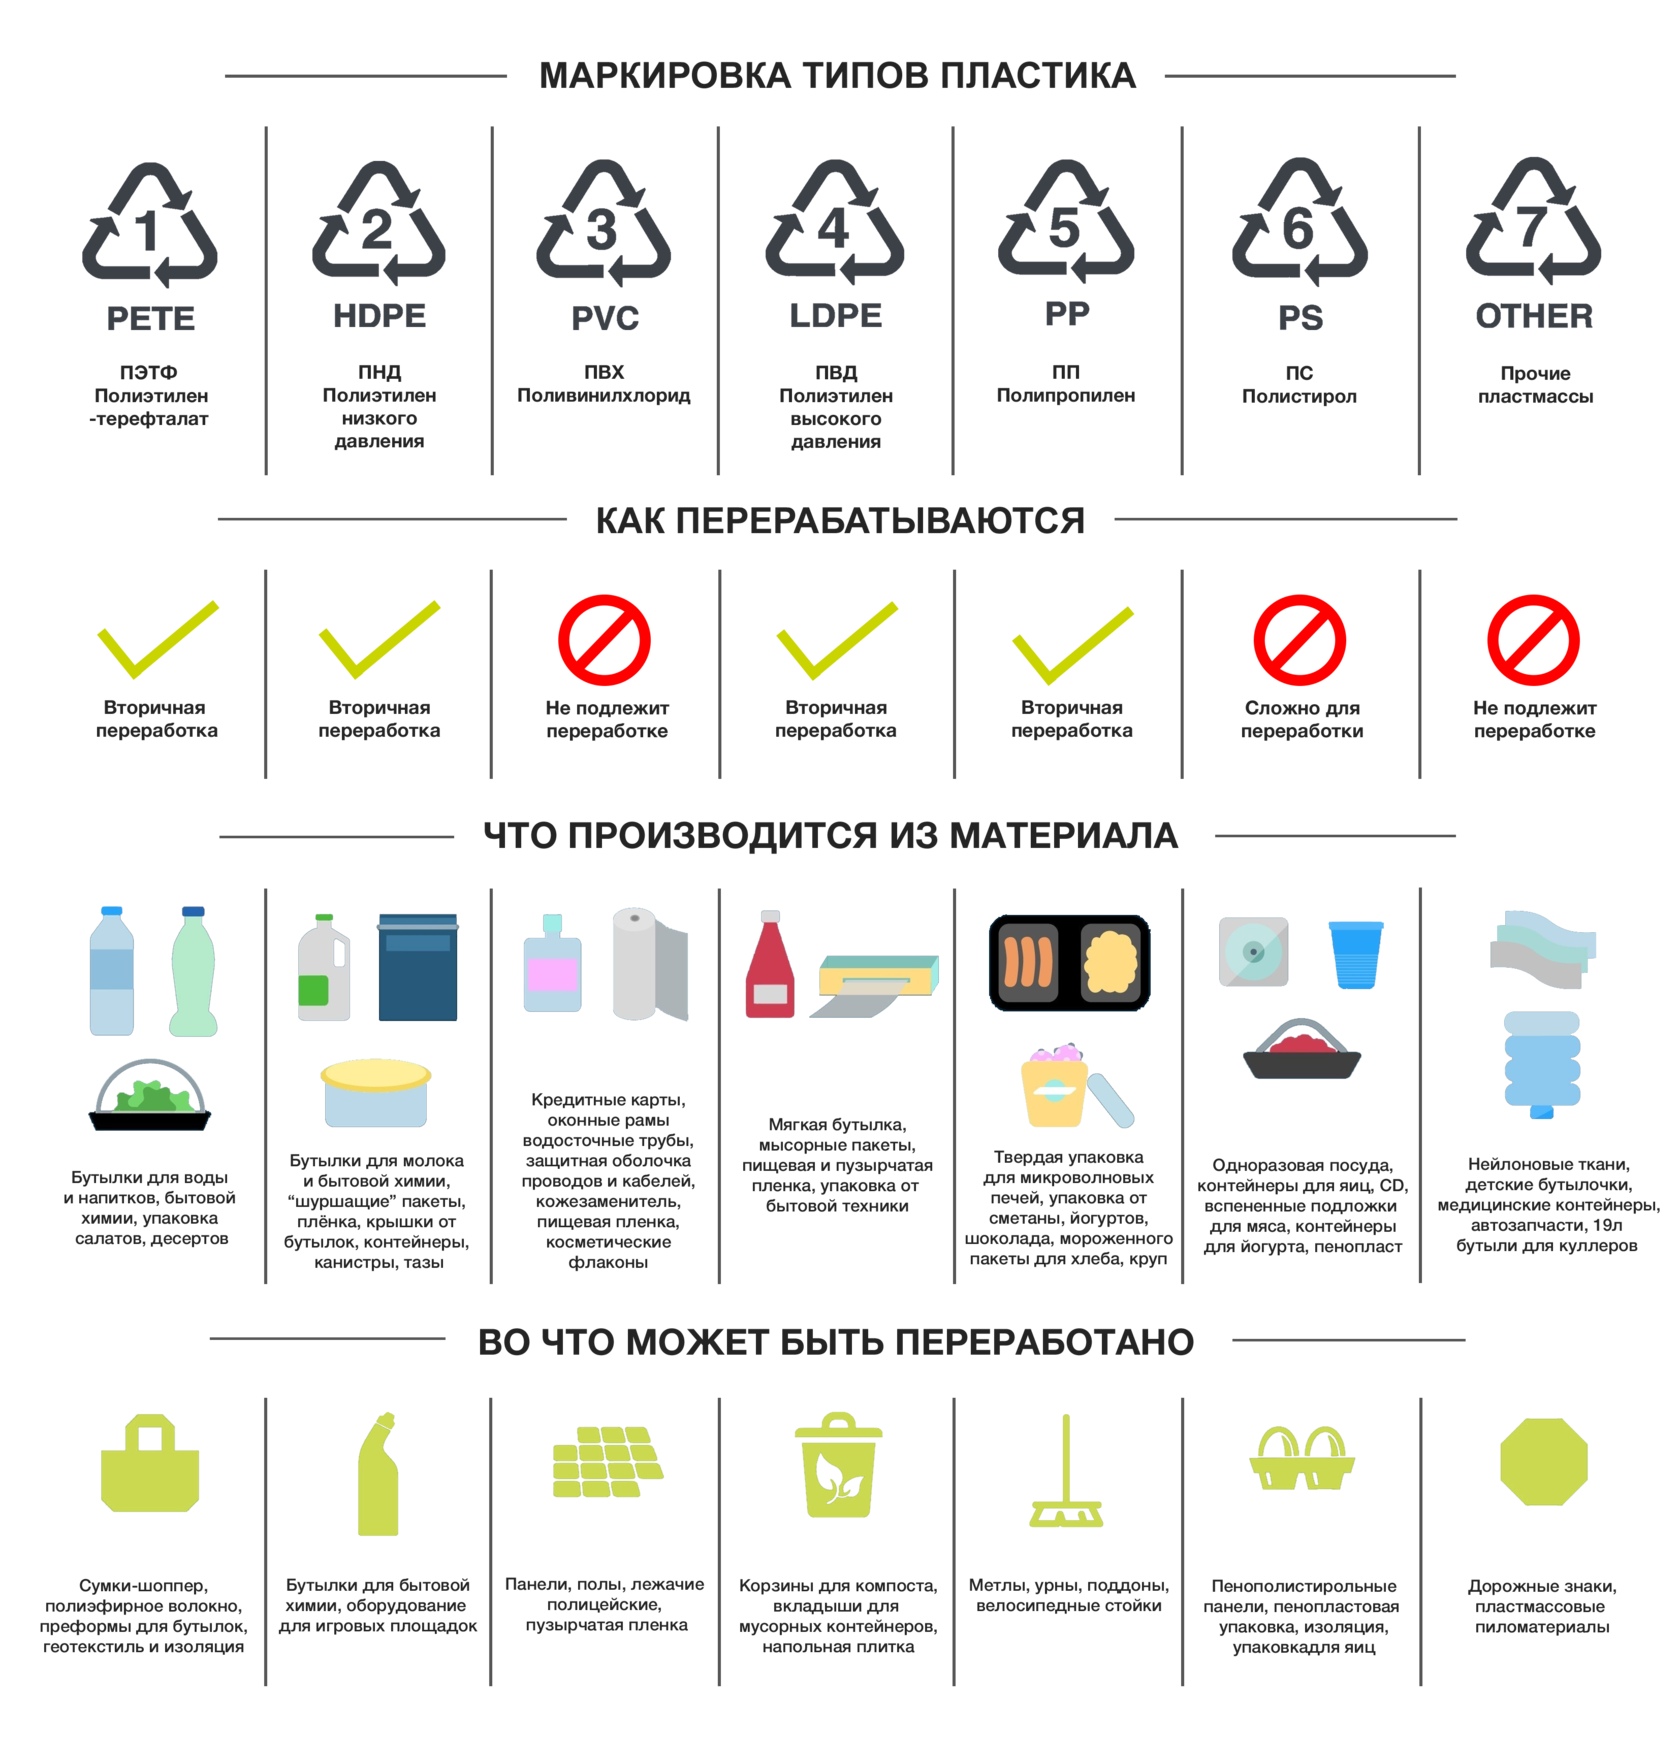 Обозначение отходов пластика. Переработка пластика маркировка 5. Коды переработки пластика таблица. Обозначения отходов для переработки. Pet таблица